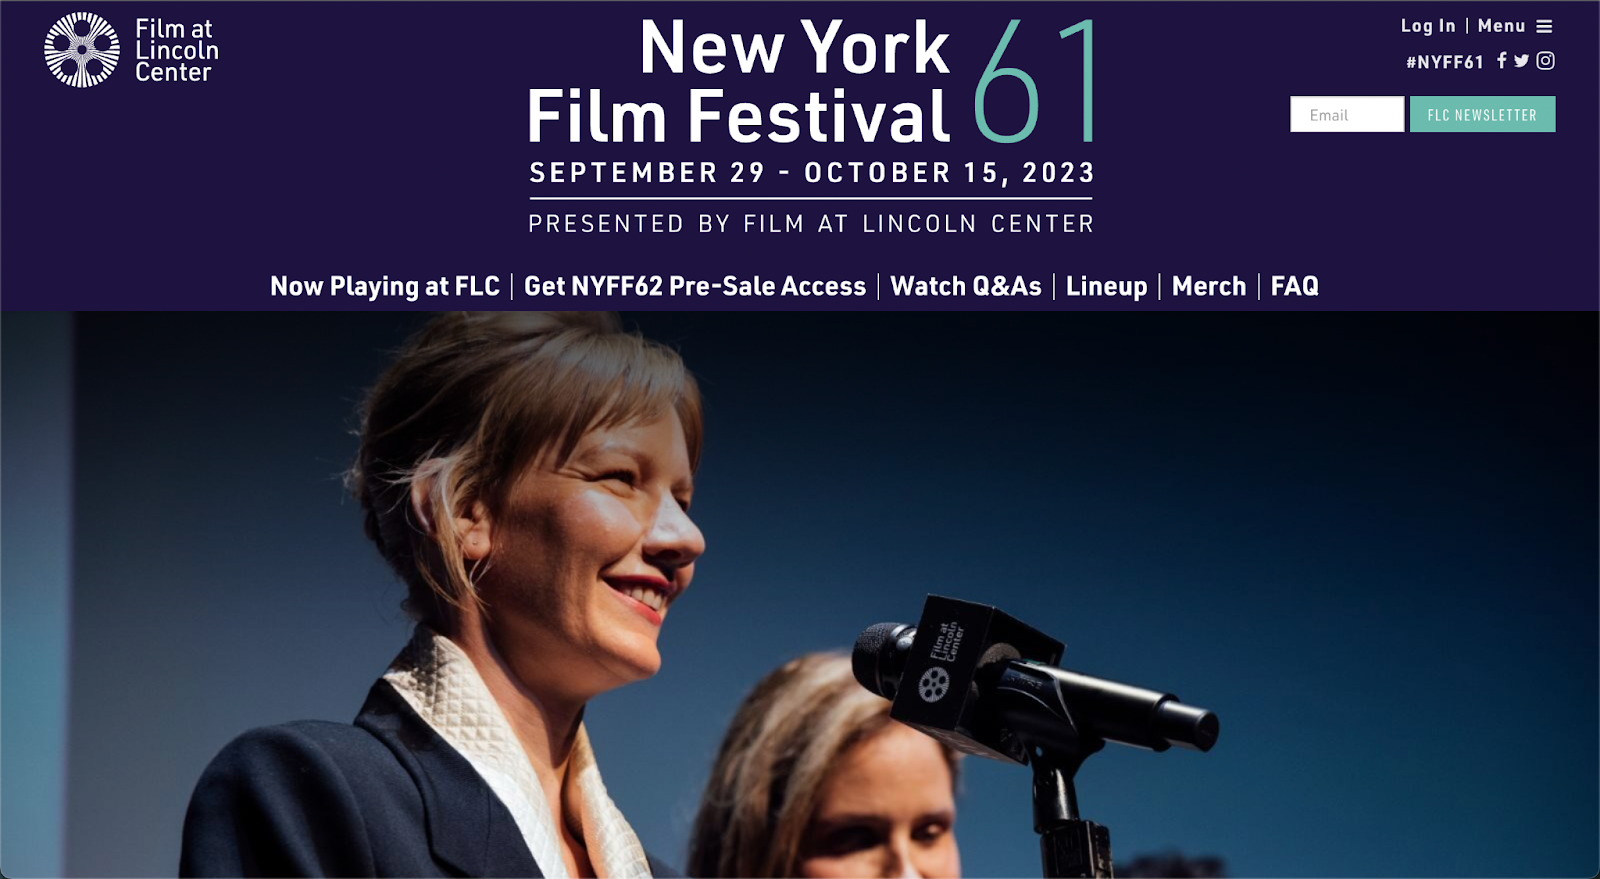 event website examples, new york film festival